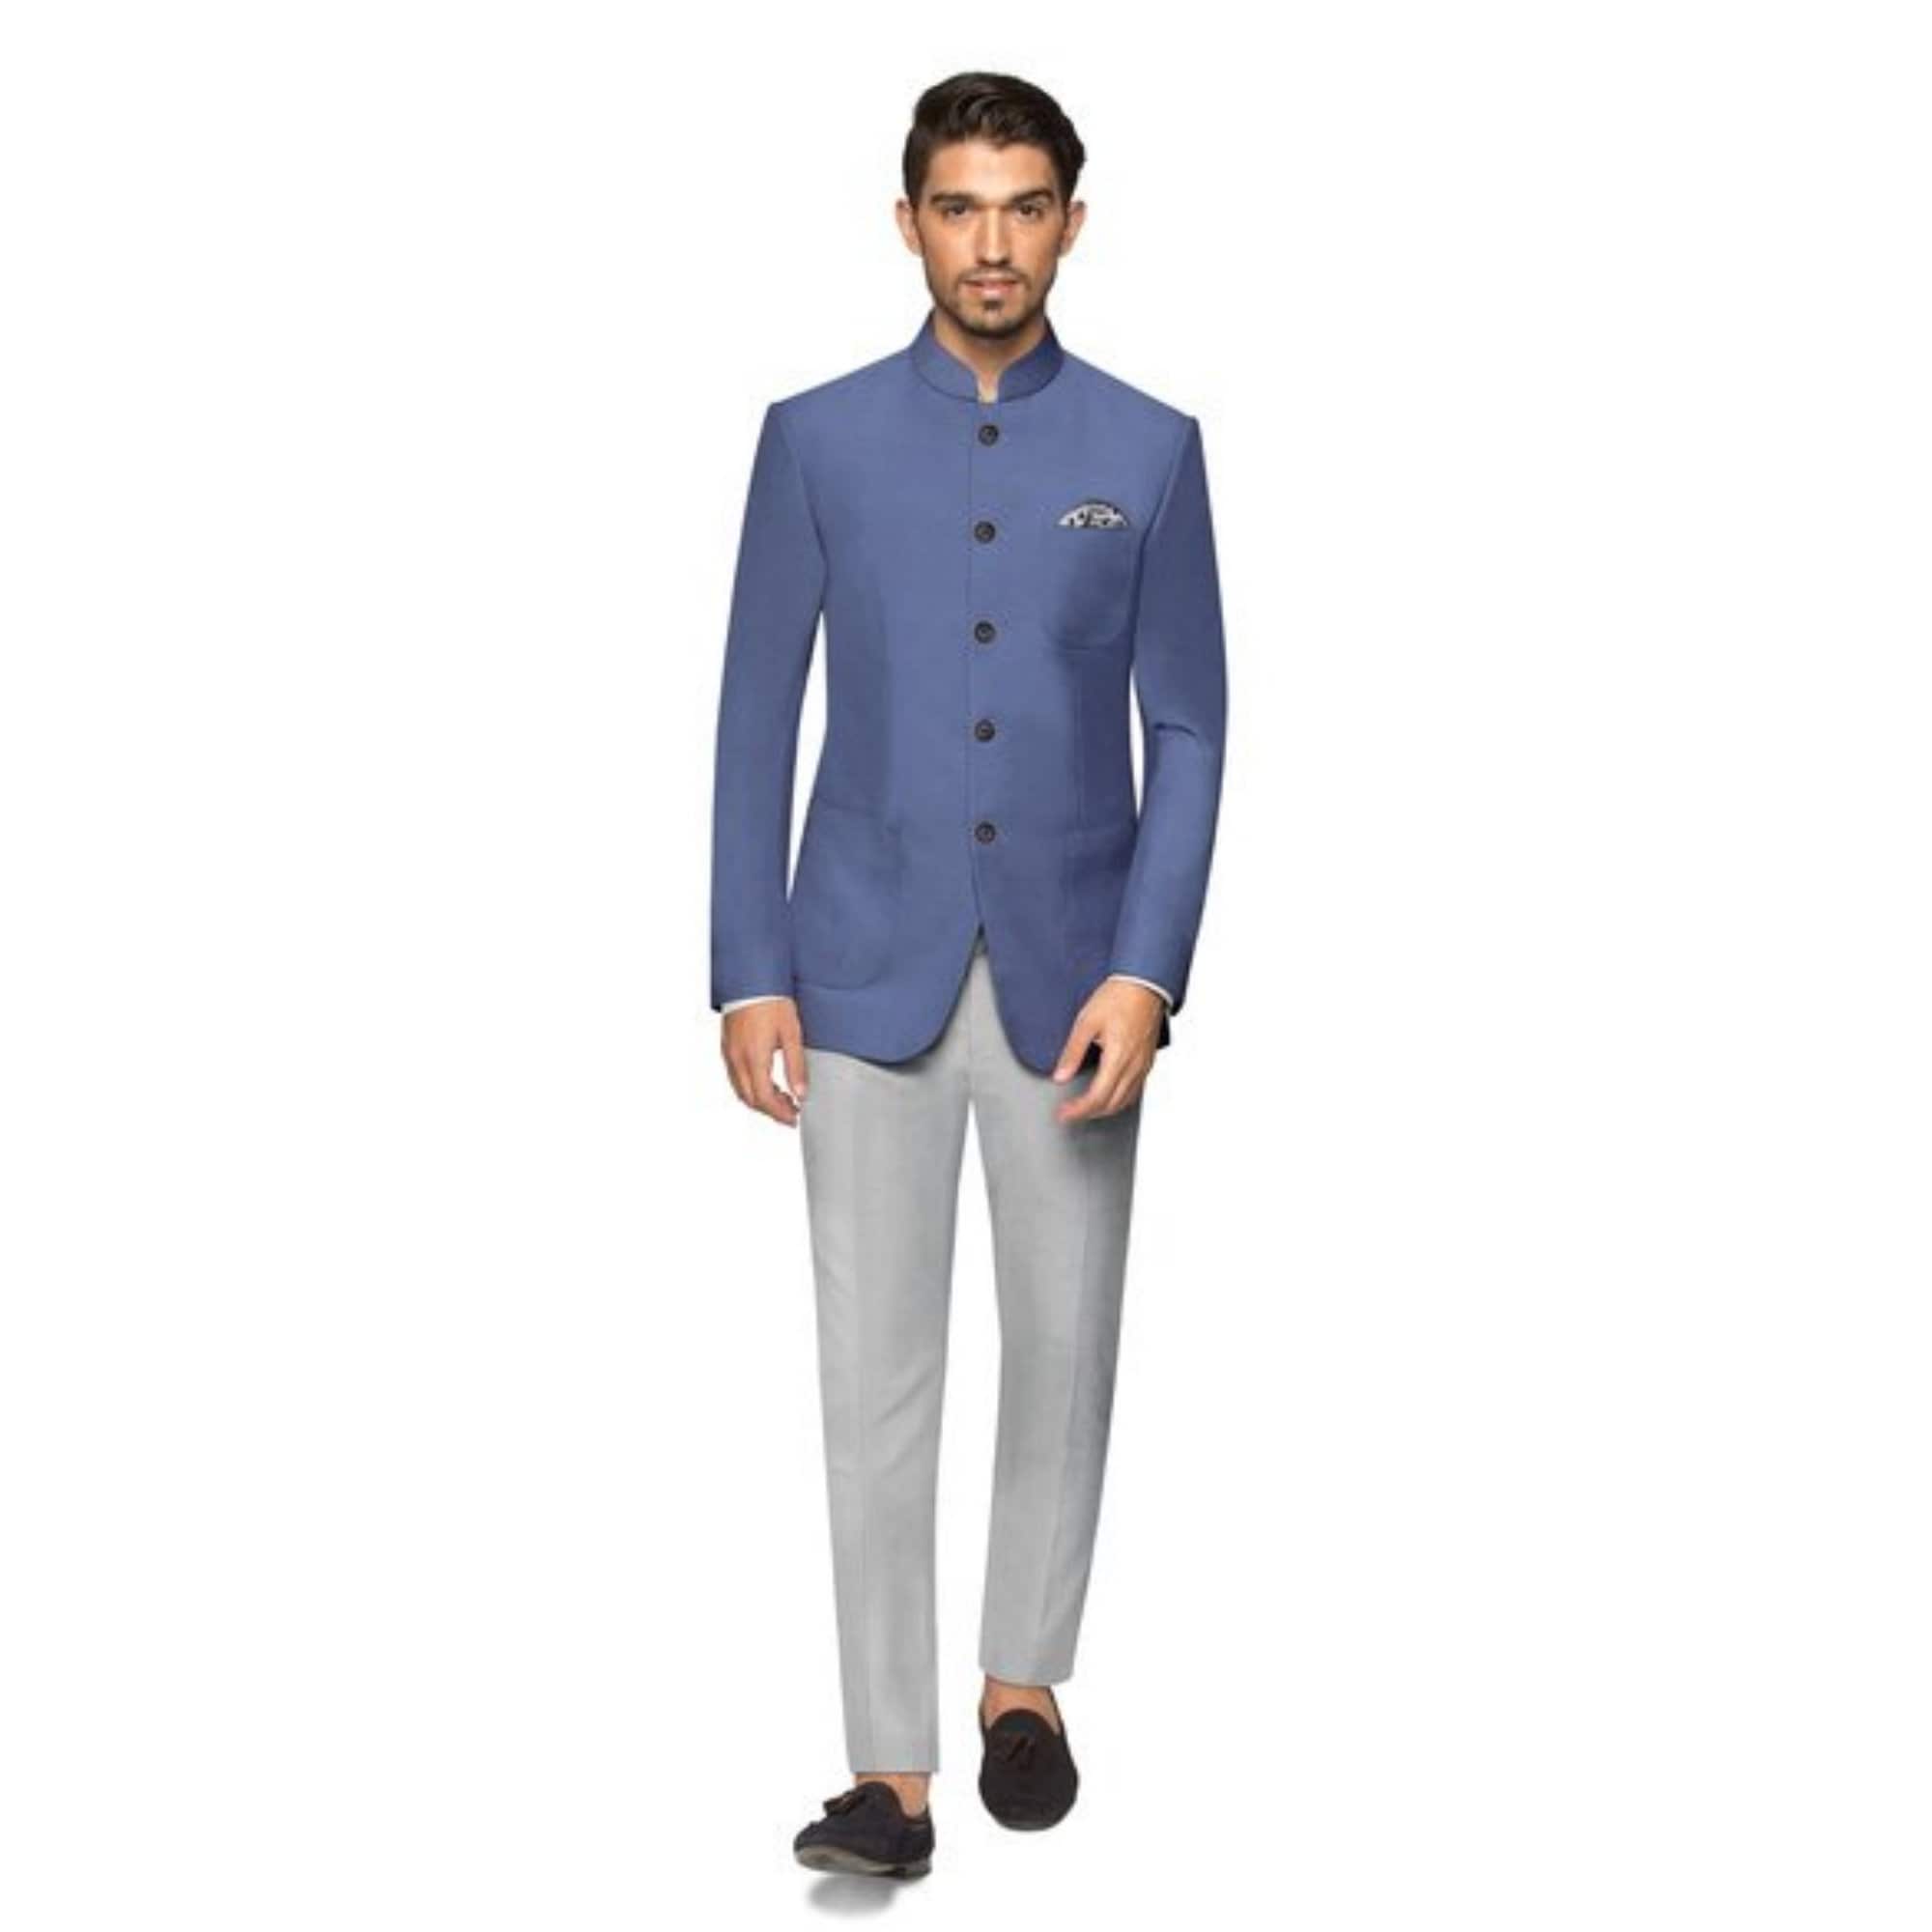 Mens Jodhpuri Suits - Buy Groom Jodhpuri Bandhgala Suits for Wedding in USA